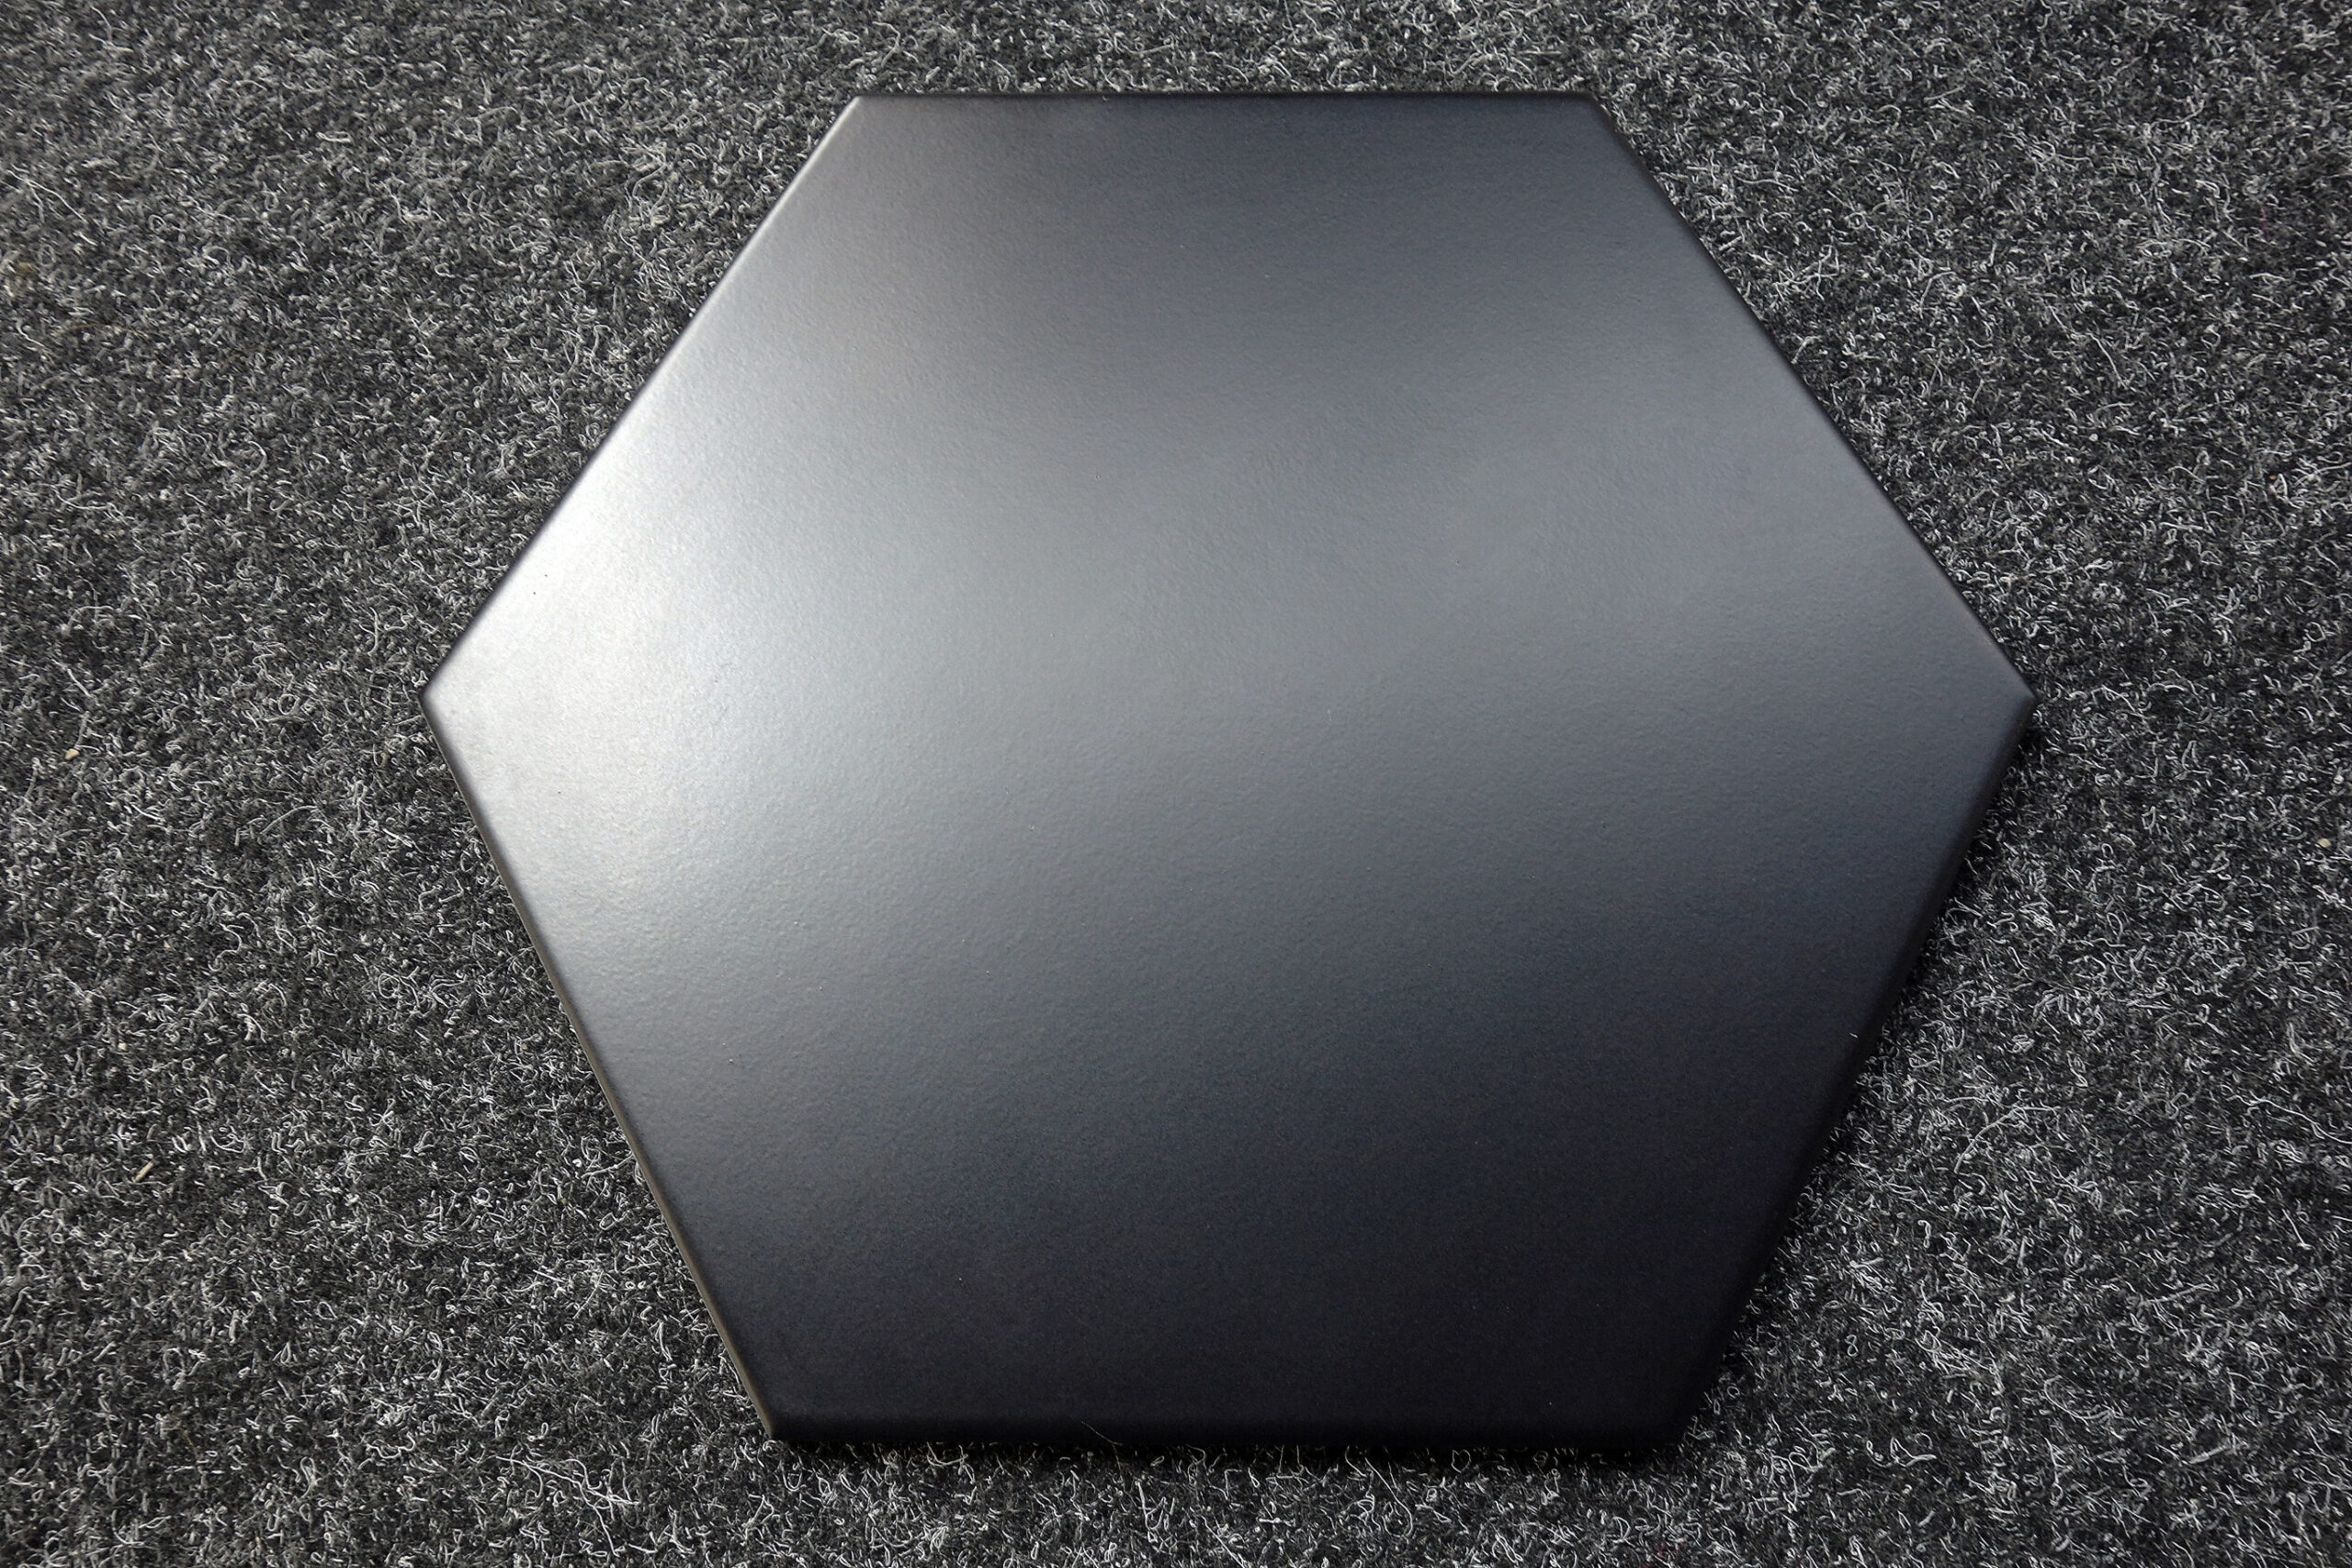 płytki heksagonalne czarne SOLID NEGRO 25x28